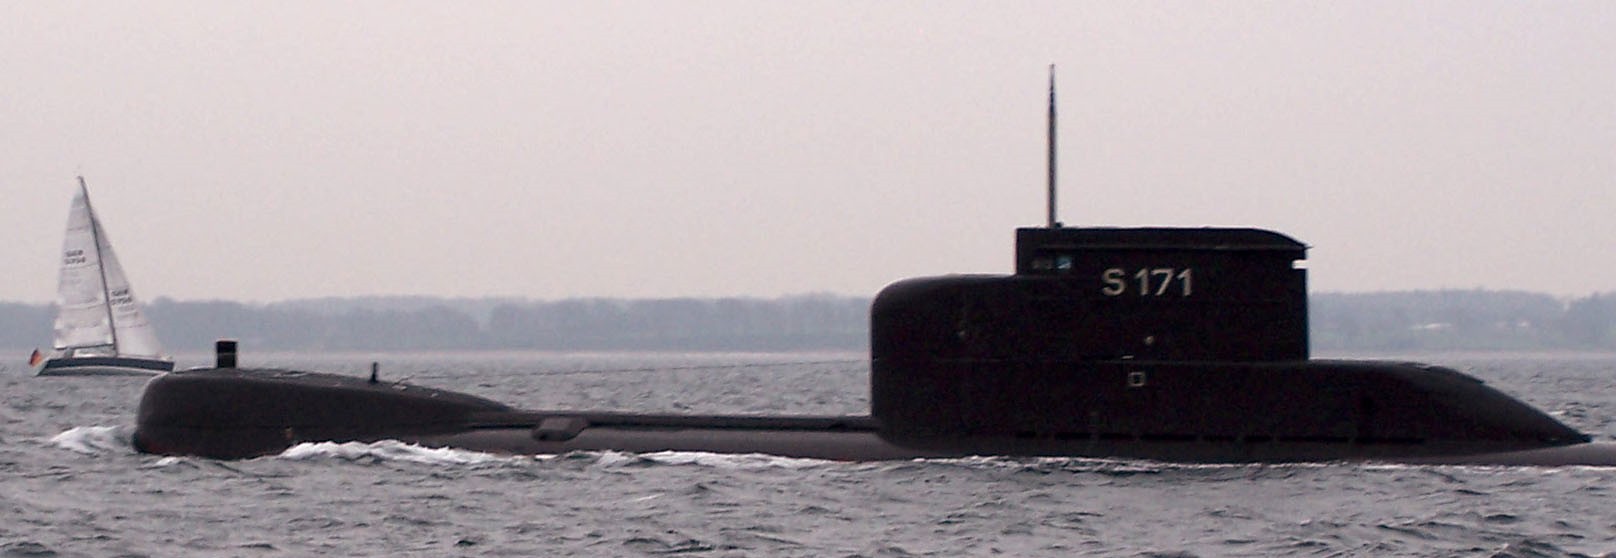 s-171 fgs u22 type 206 class submarine german navy 02